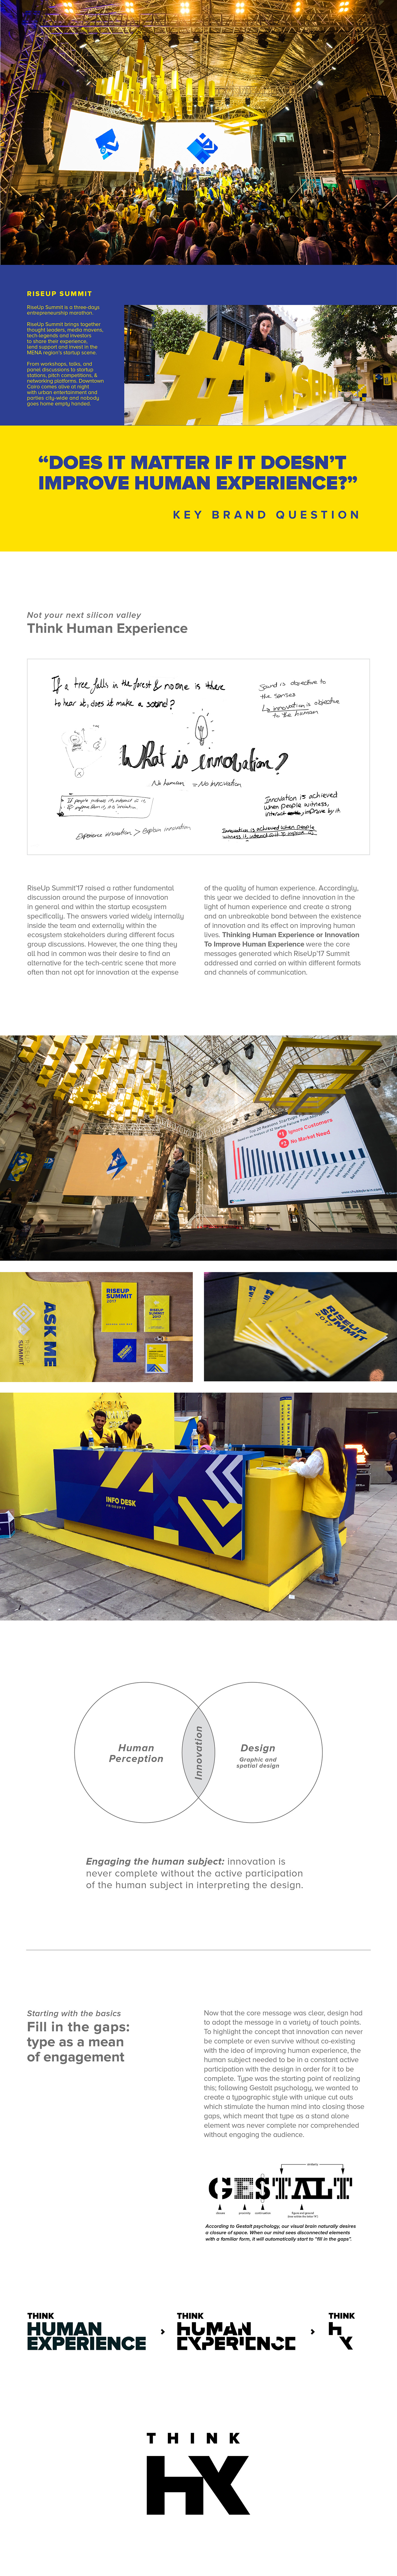 Event design entrepreneurship   branding  spatial architecture venue print digital graphic